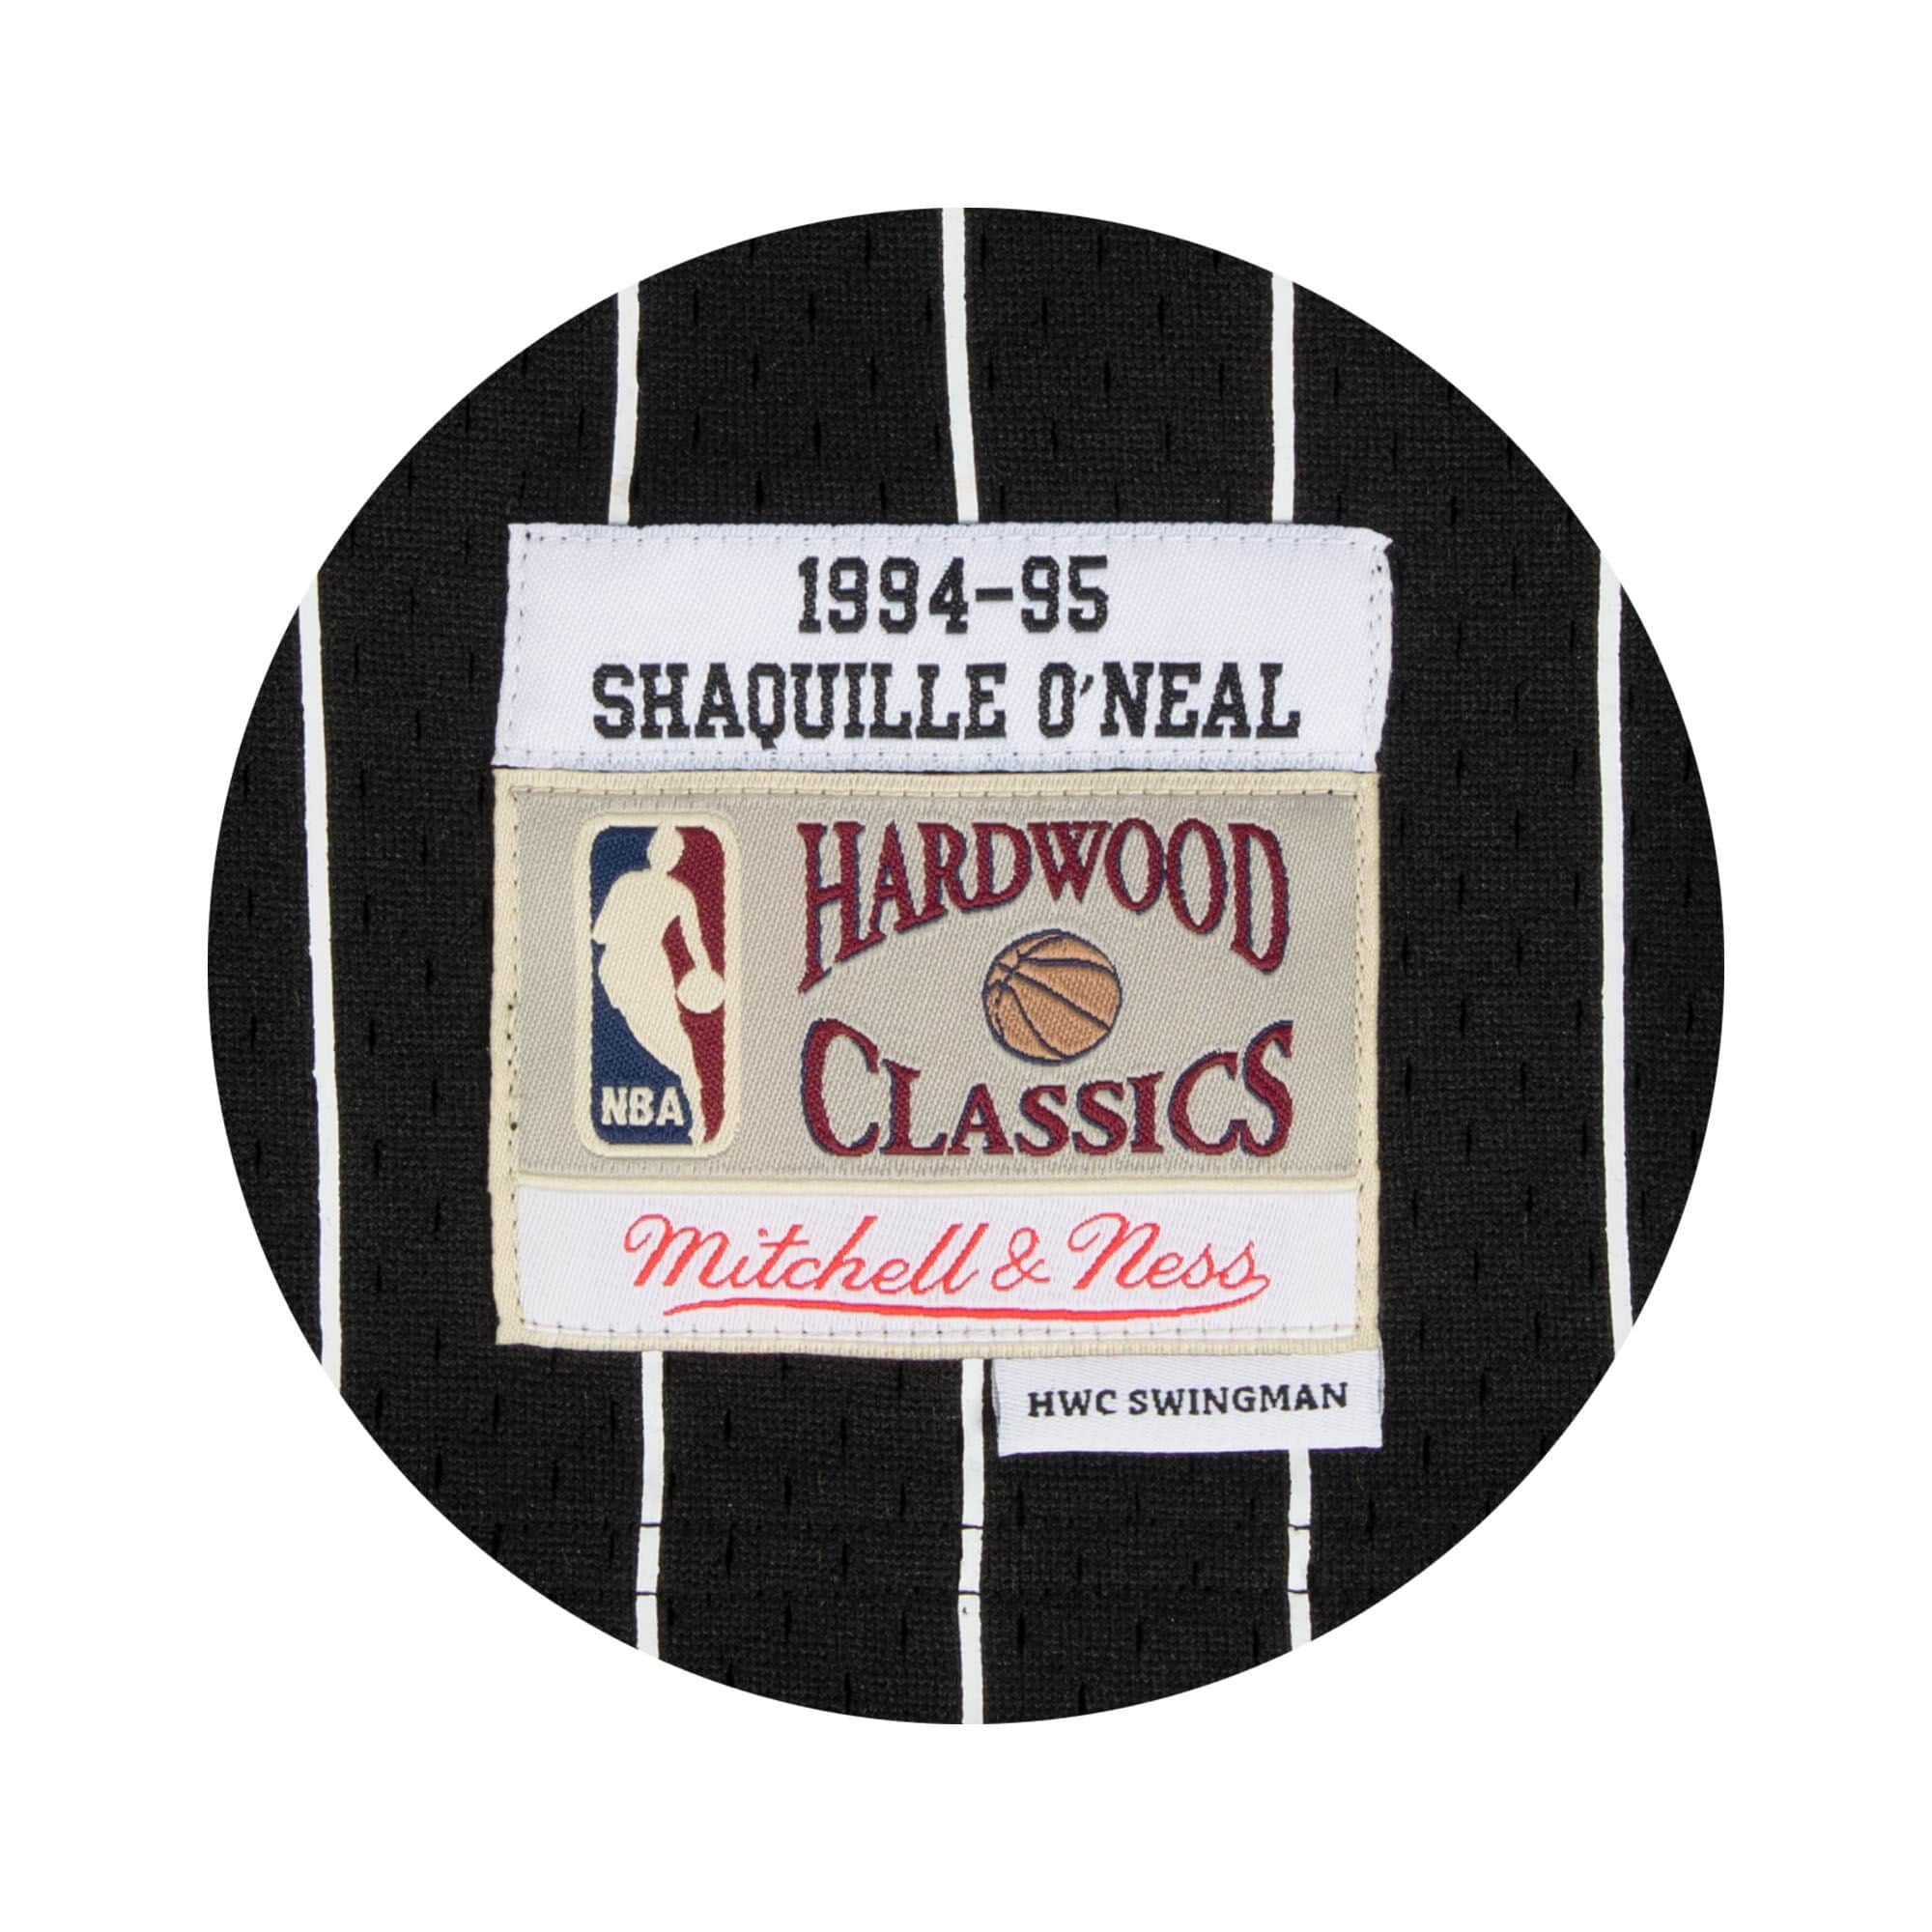 Shaquille O'neal- Orlando Magic Throwback Jersey – Kiwi Jersey Co.